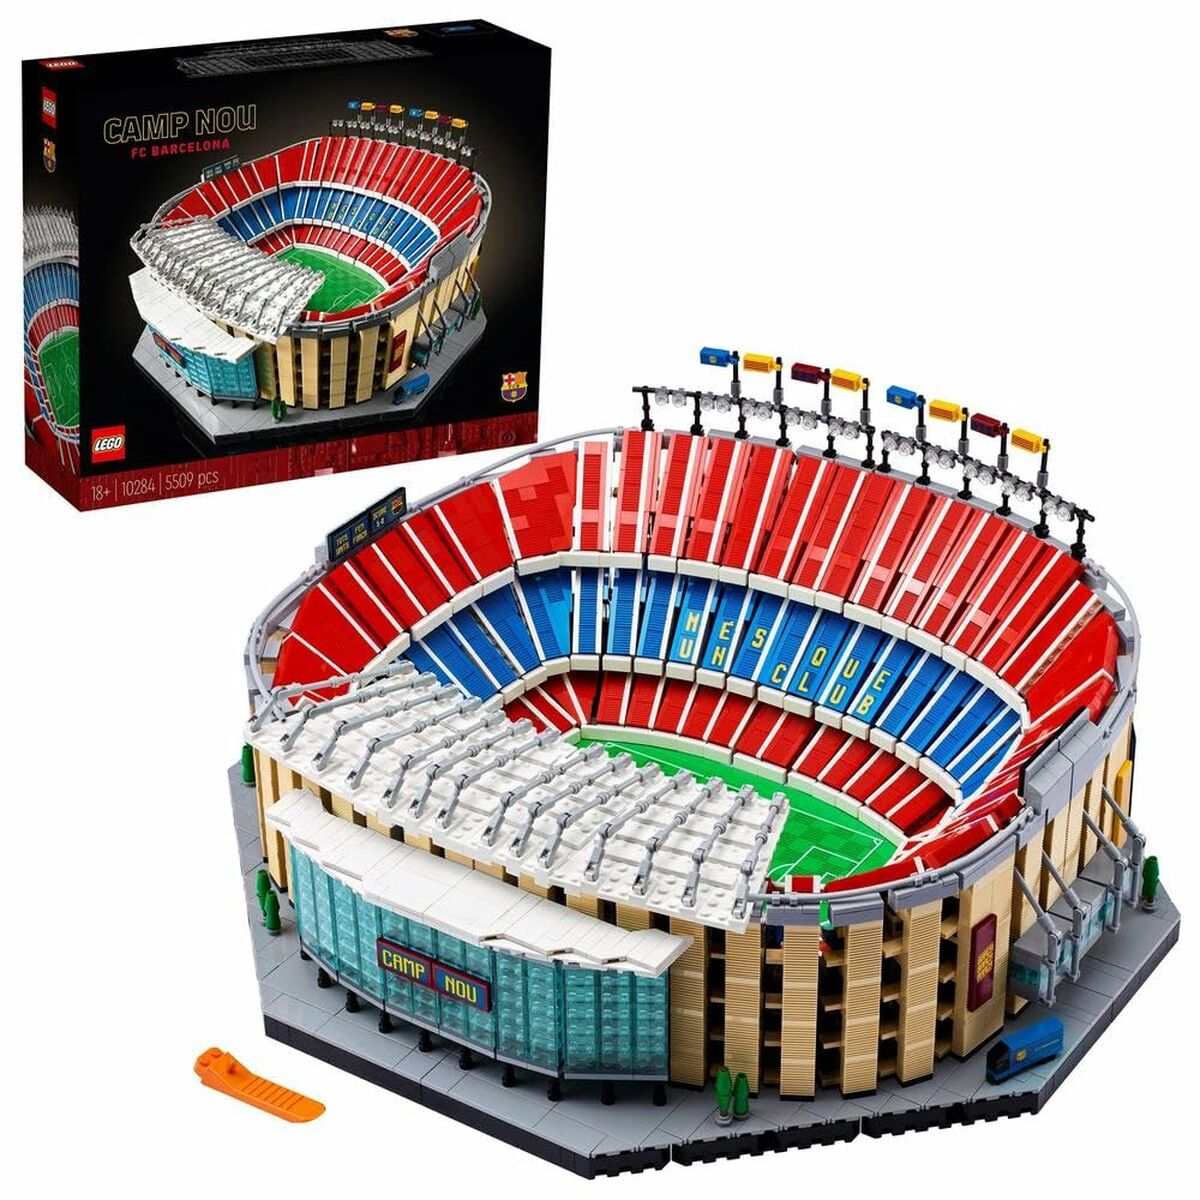 Playset Lego Icons: Camp Nou - FC Barcelona 10284 5509 Pezzi 49 x 20 x 46 cm